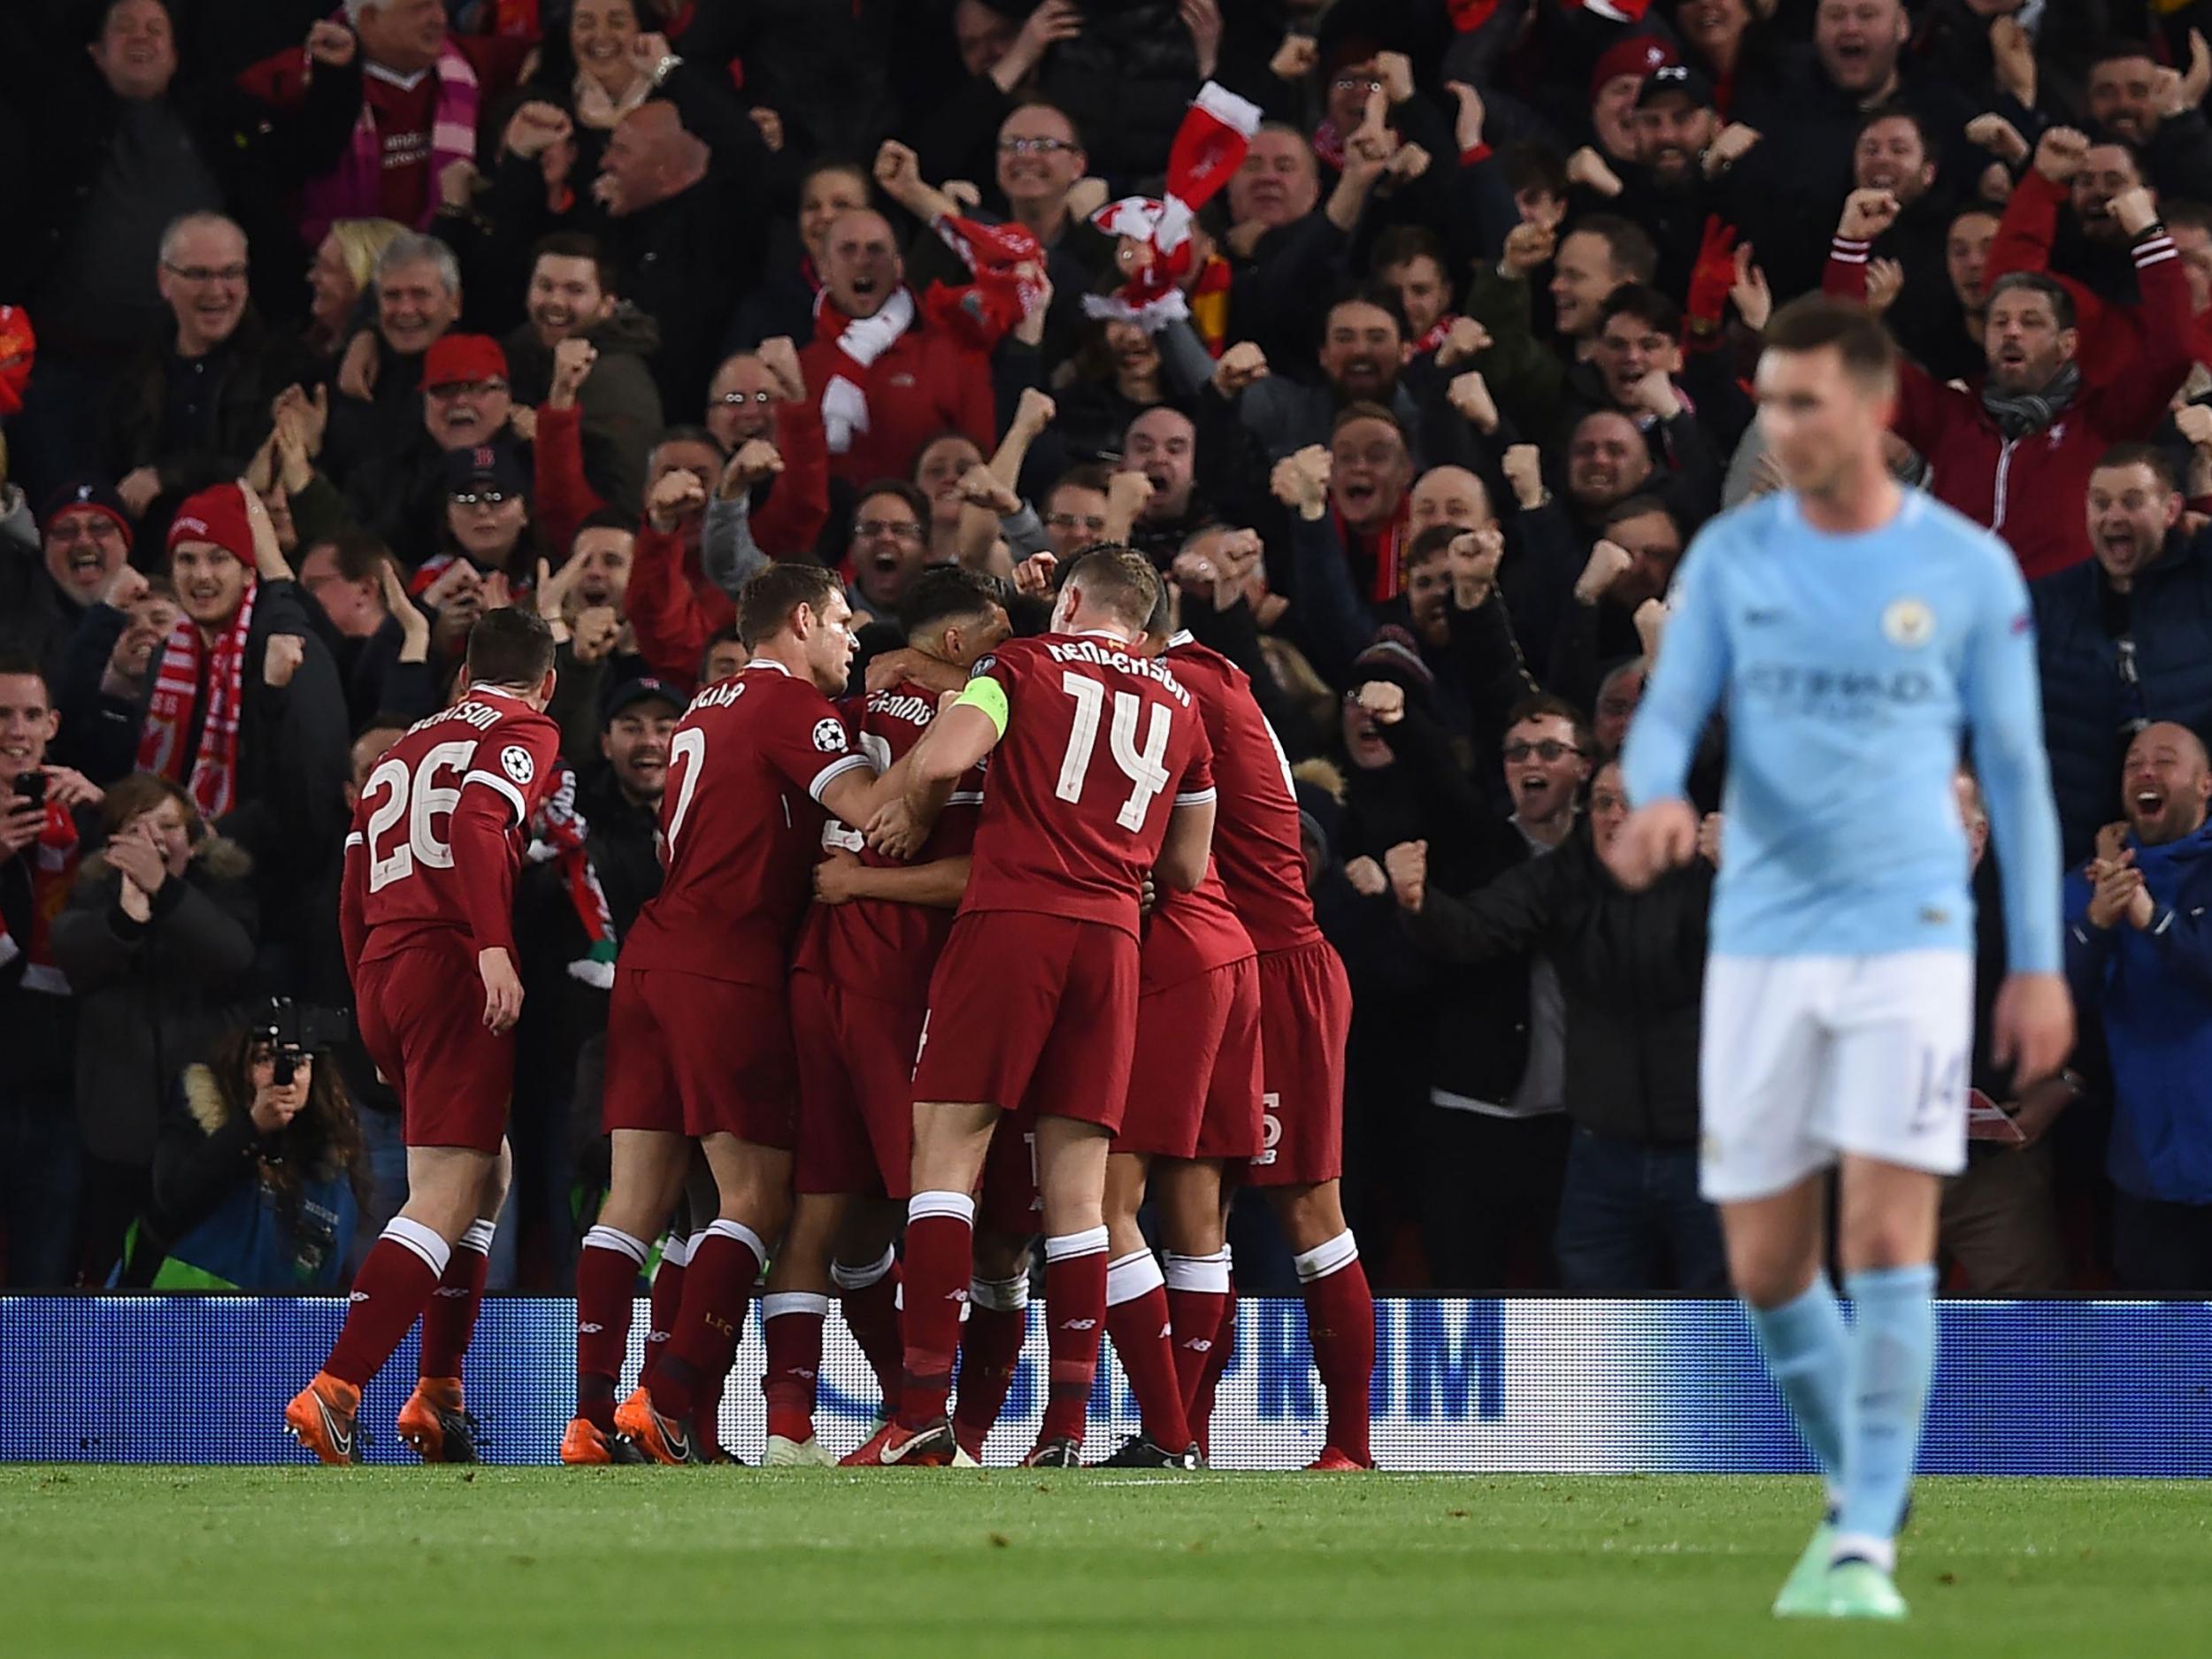 Manchester City vs Liverpool: Five talking points that could decide Champions League quarter-final